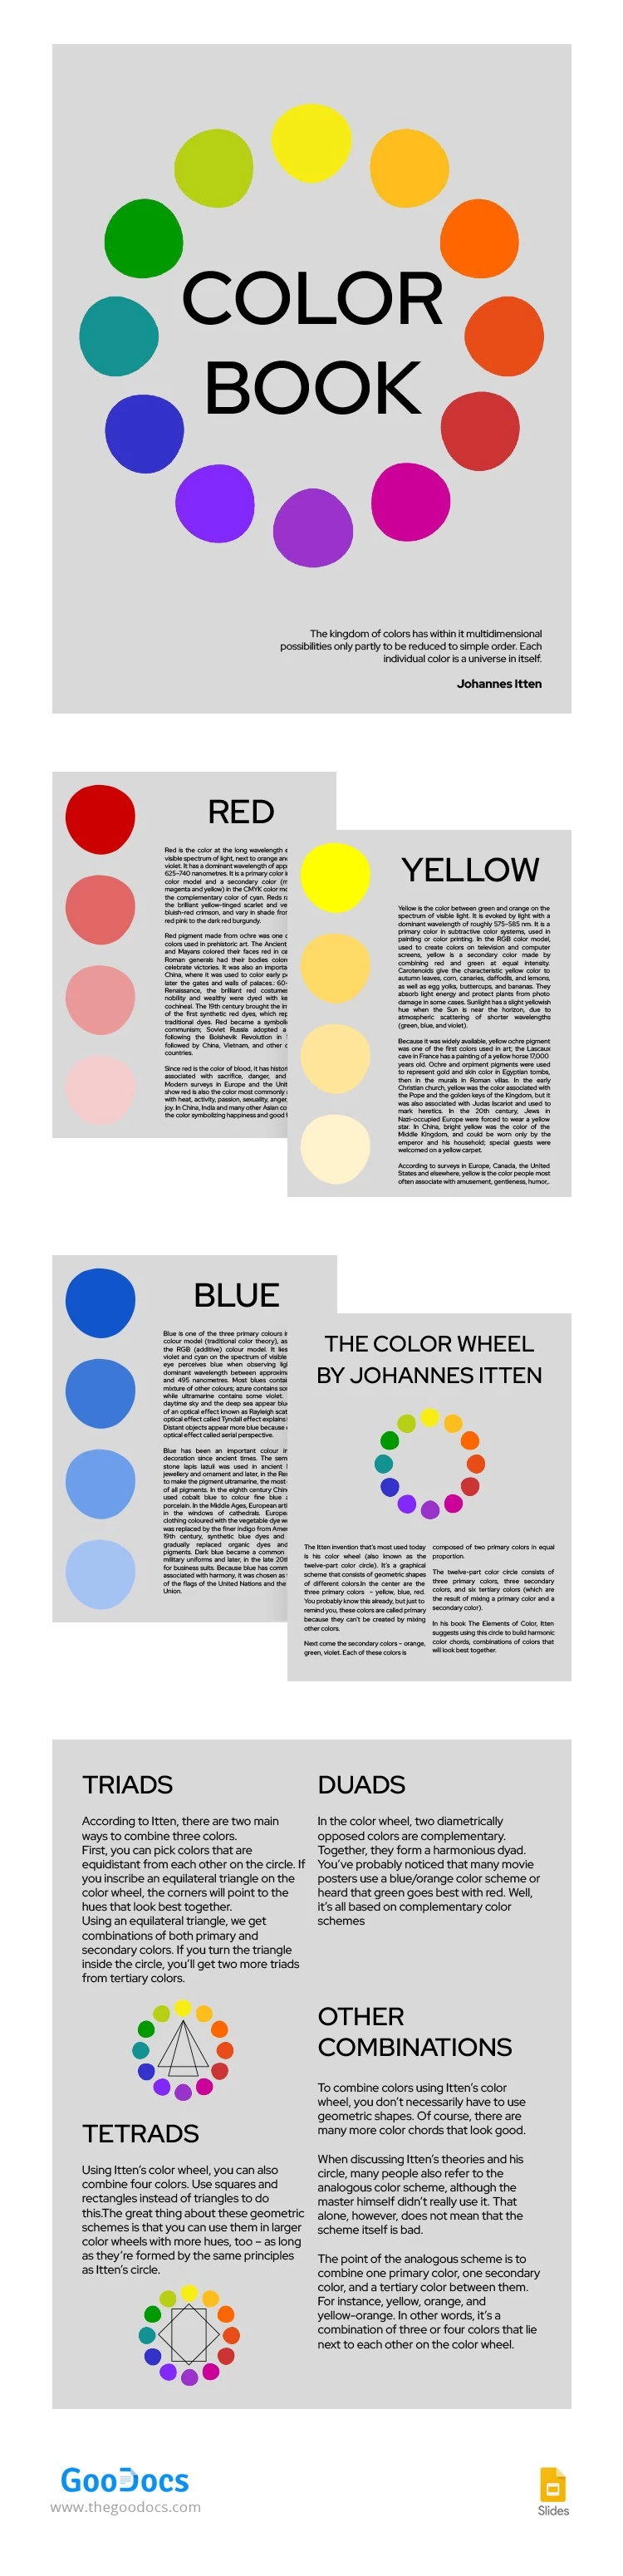 Libro de color gris - free Google Docs Template - 10063679